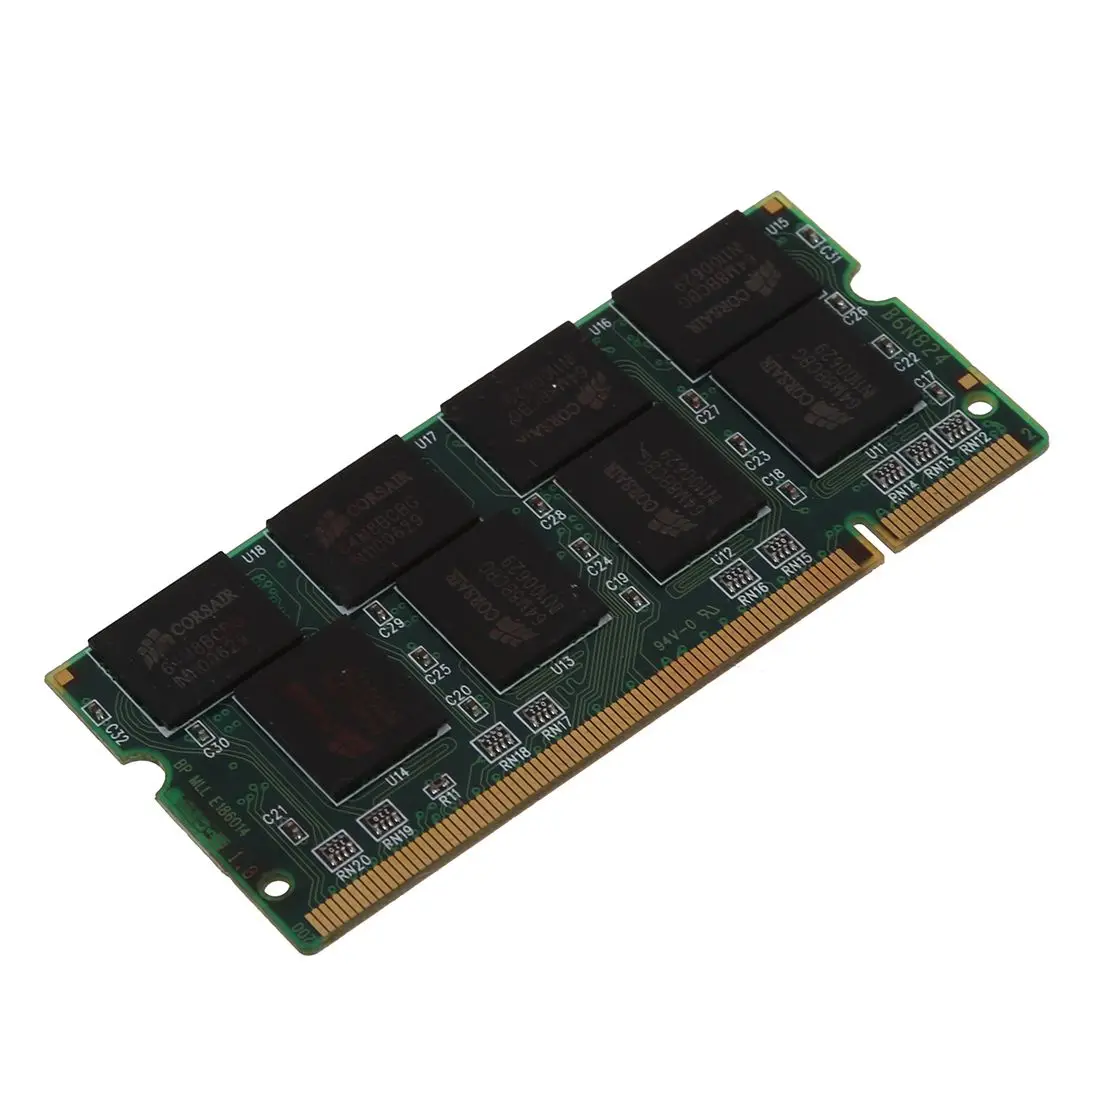 DDR1 1 ГБ ОЗУ PC2700 DDR333 200Pin Sodimm память ddr 1 Гб, 333 МГц NON-ECC ПК DIMM